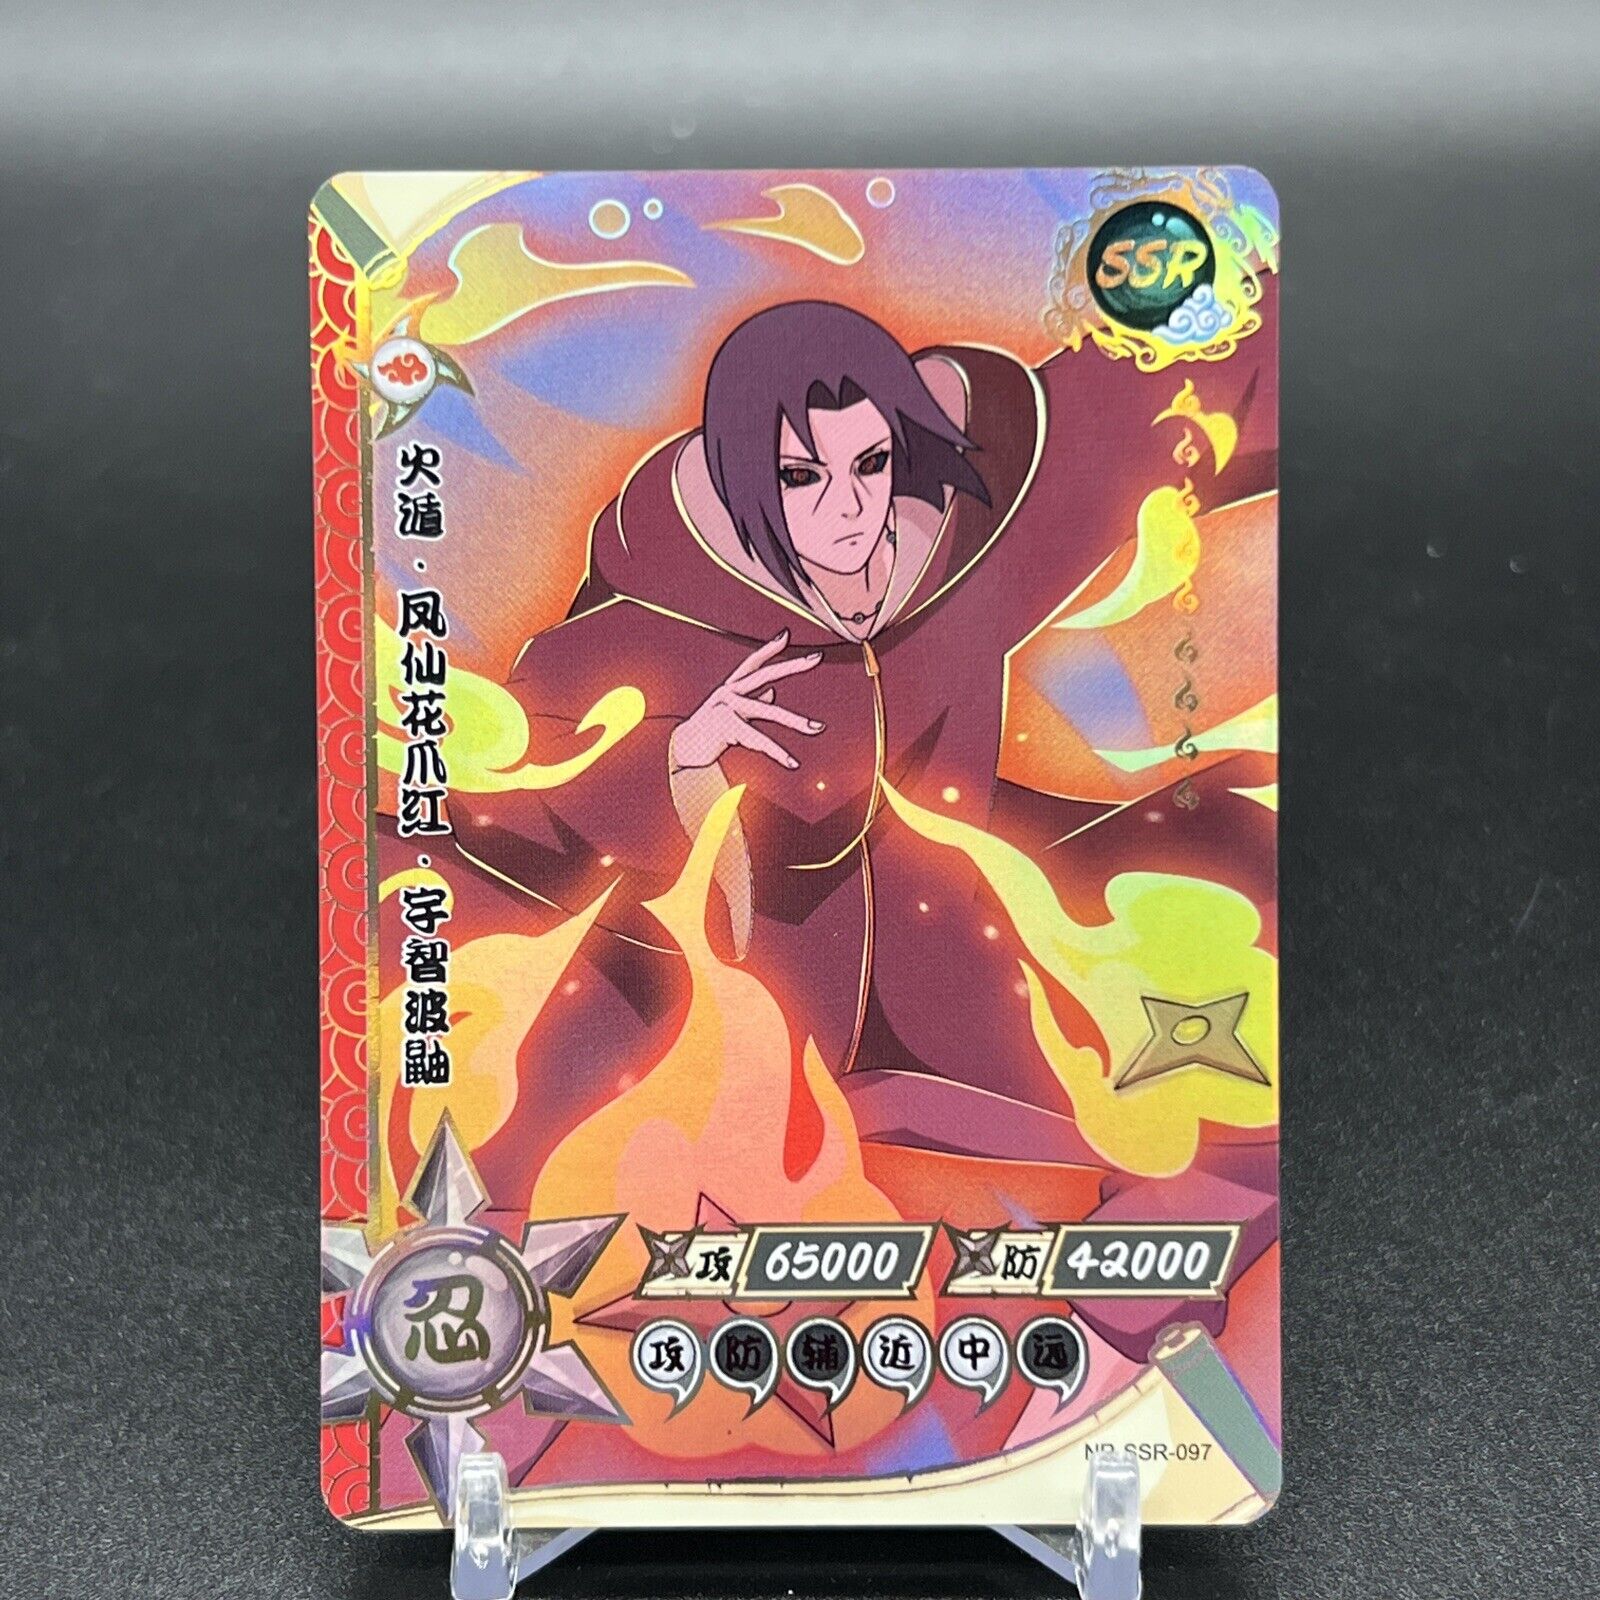 Itachi NR-SSR-097 Naruto Kayou Card | eBay